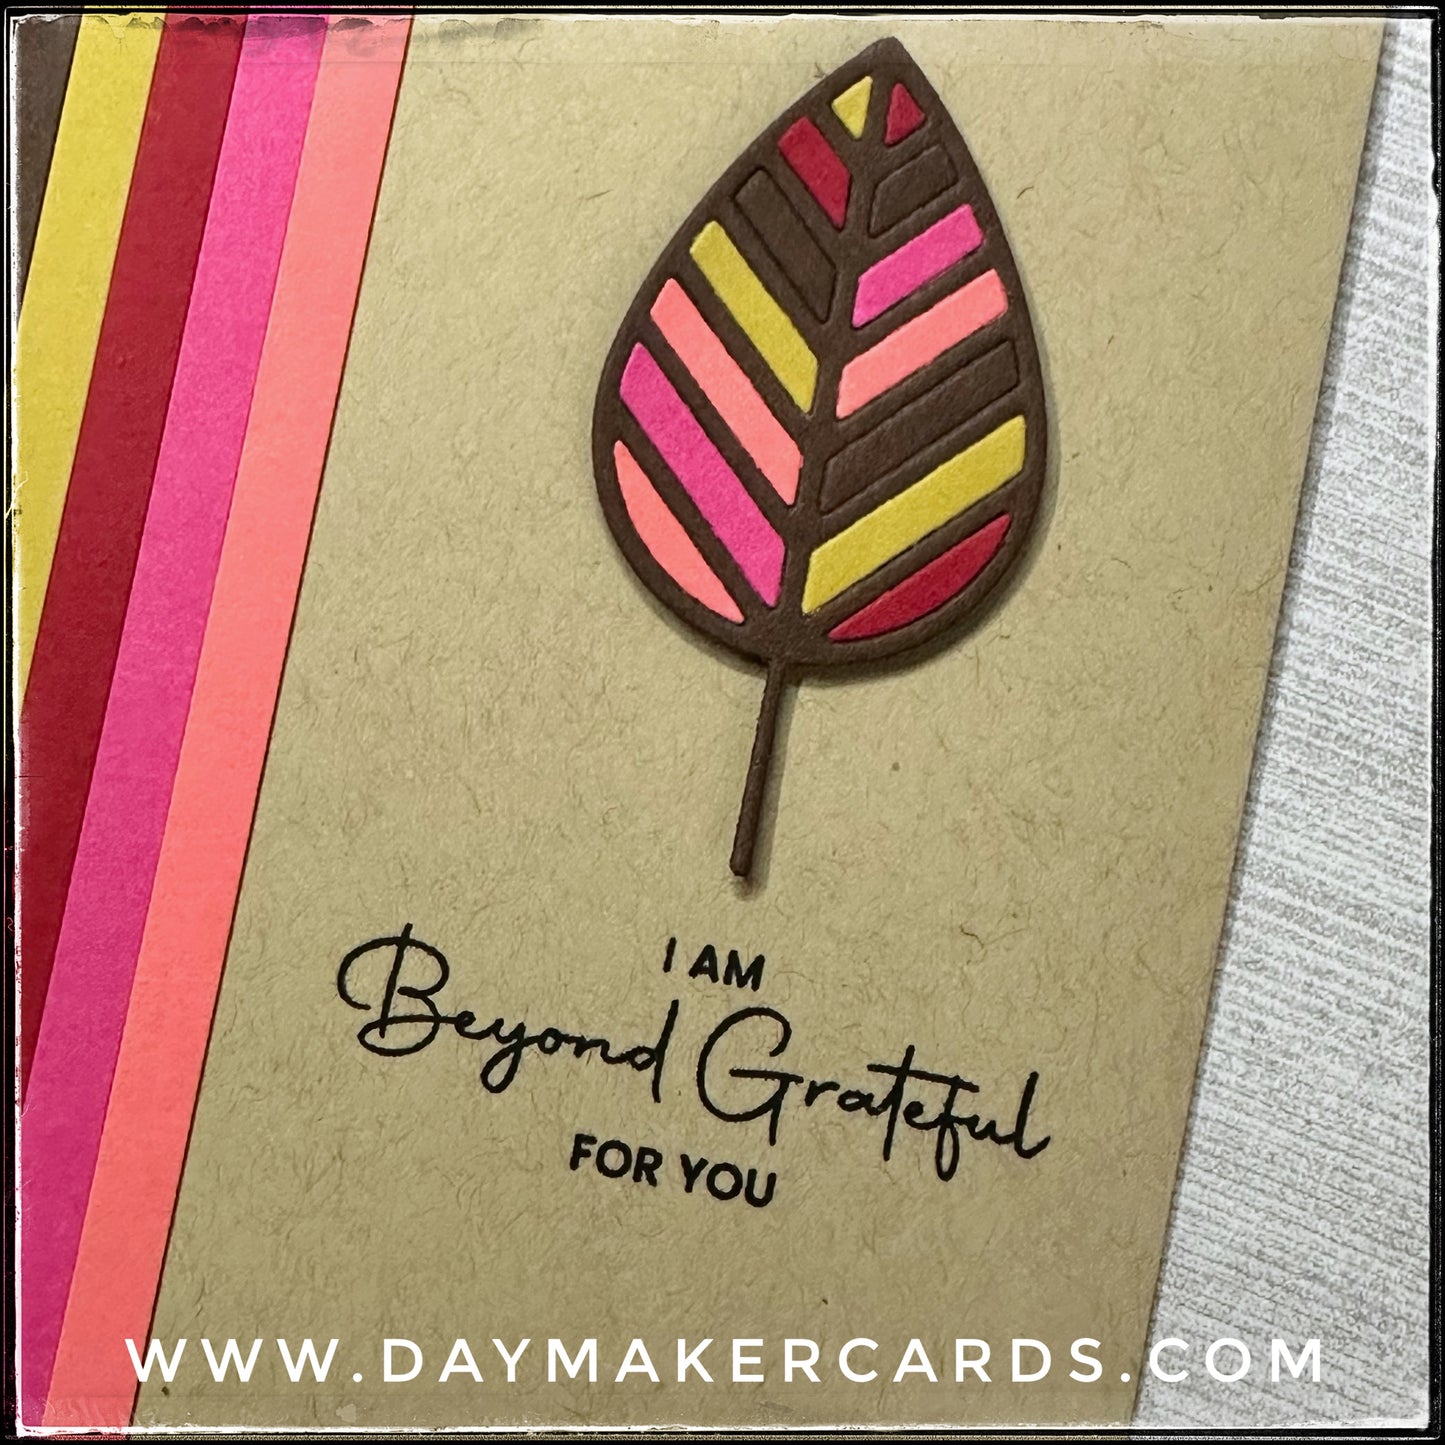 Beyond Grateful Handmade Card